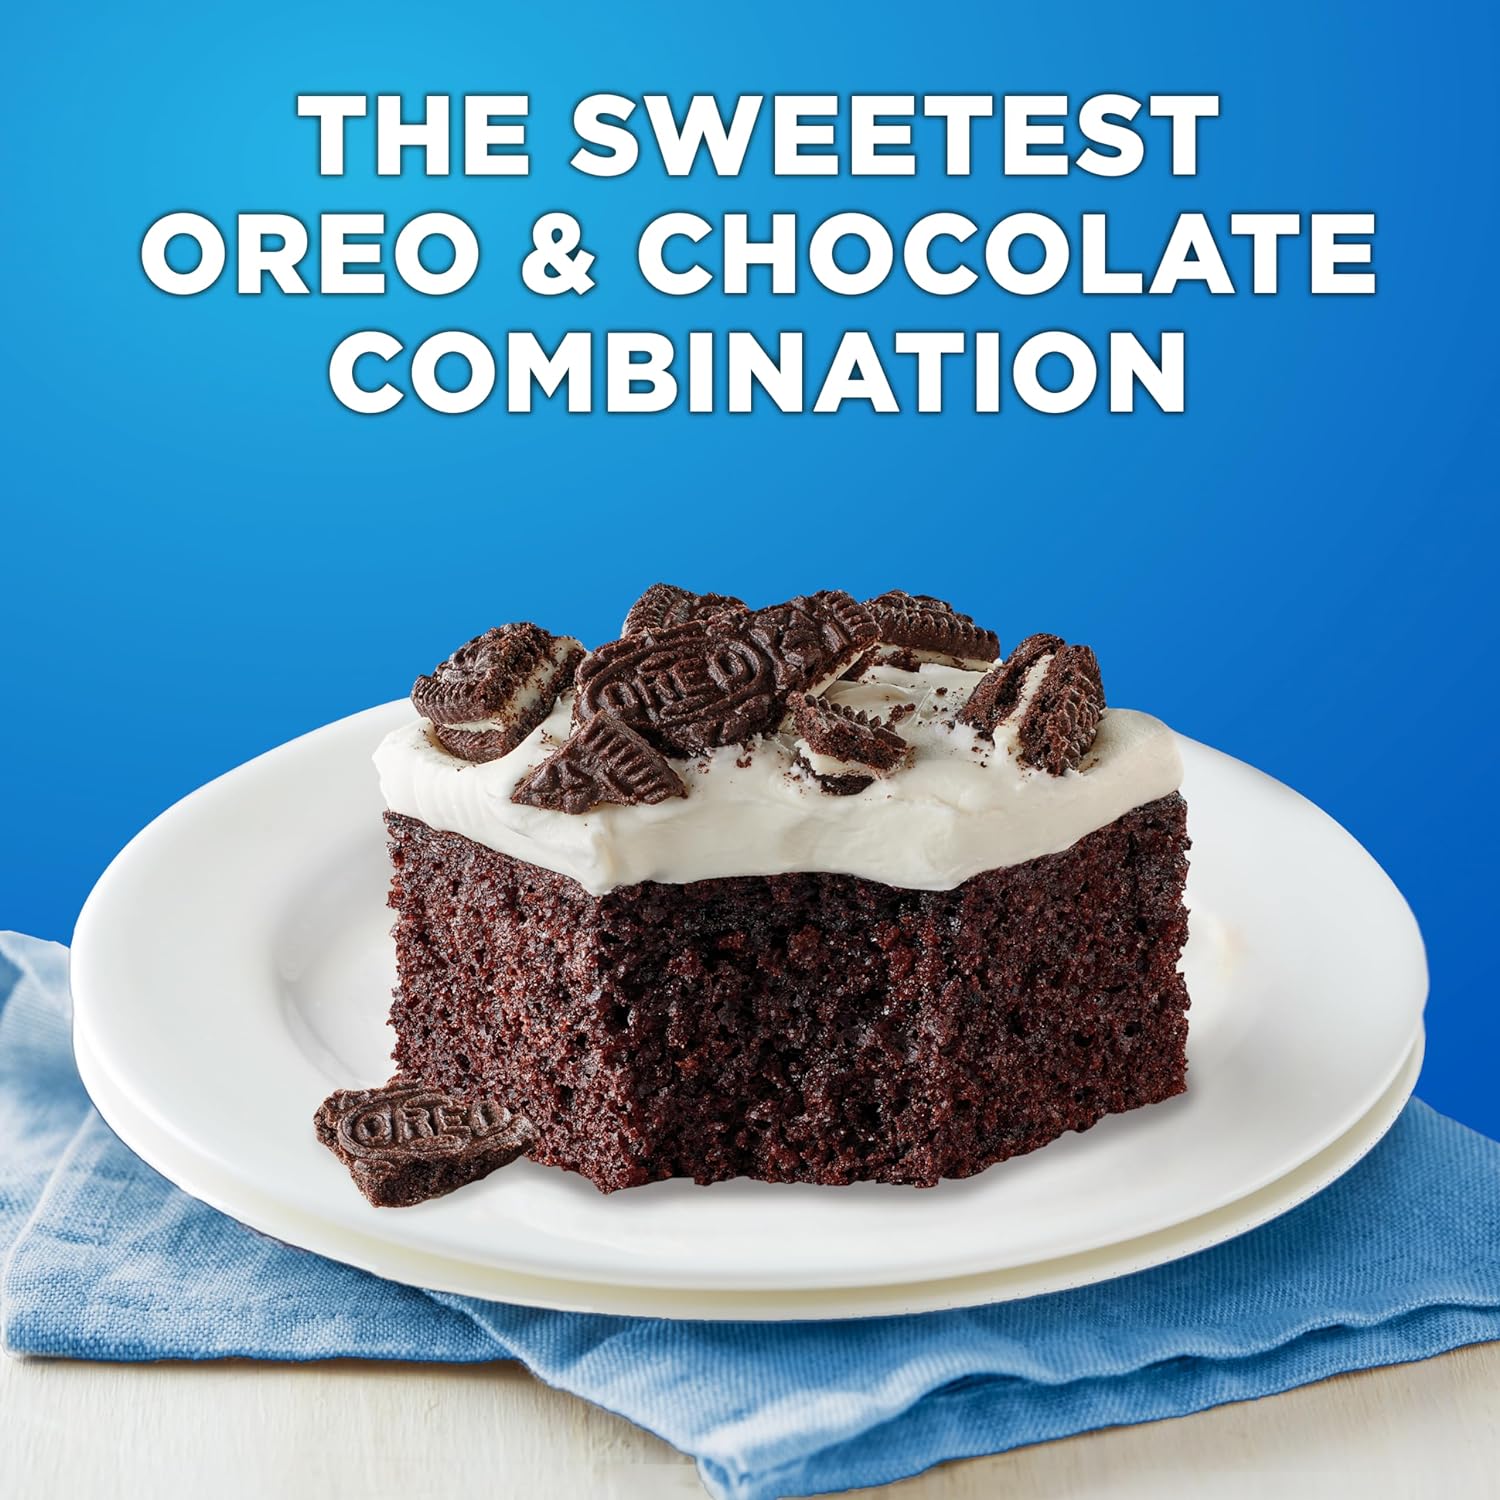 Betty Crocker OREO Chocolate Cake Mix, Chocolate Cake Baking Mix With OREO Cookie Pieces, 9.3 oz : Everything Else